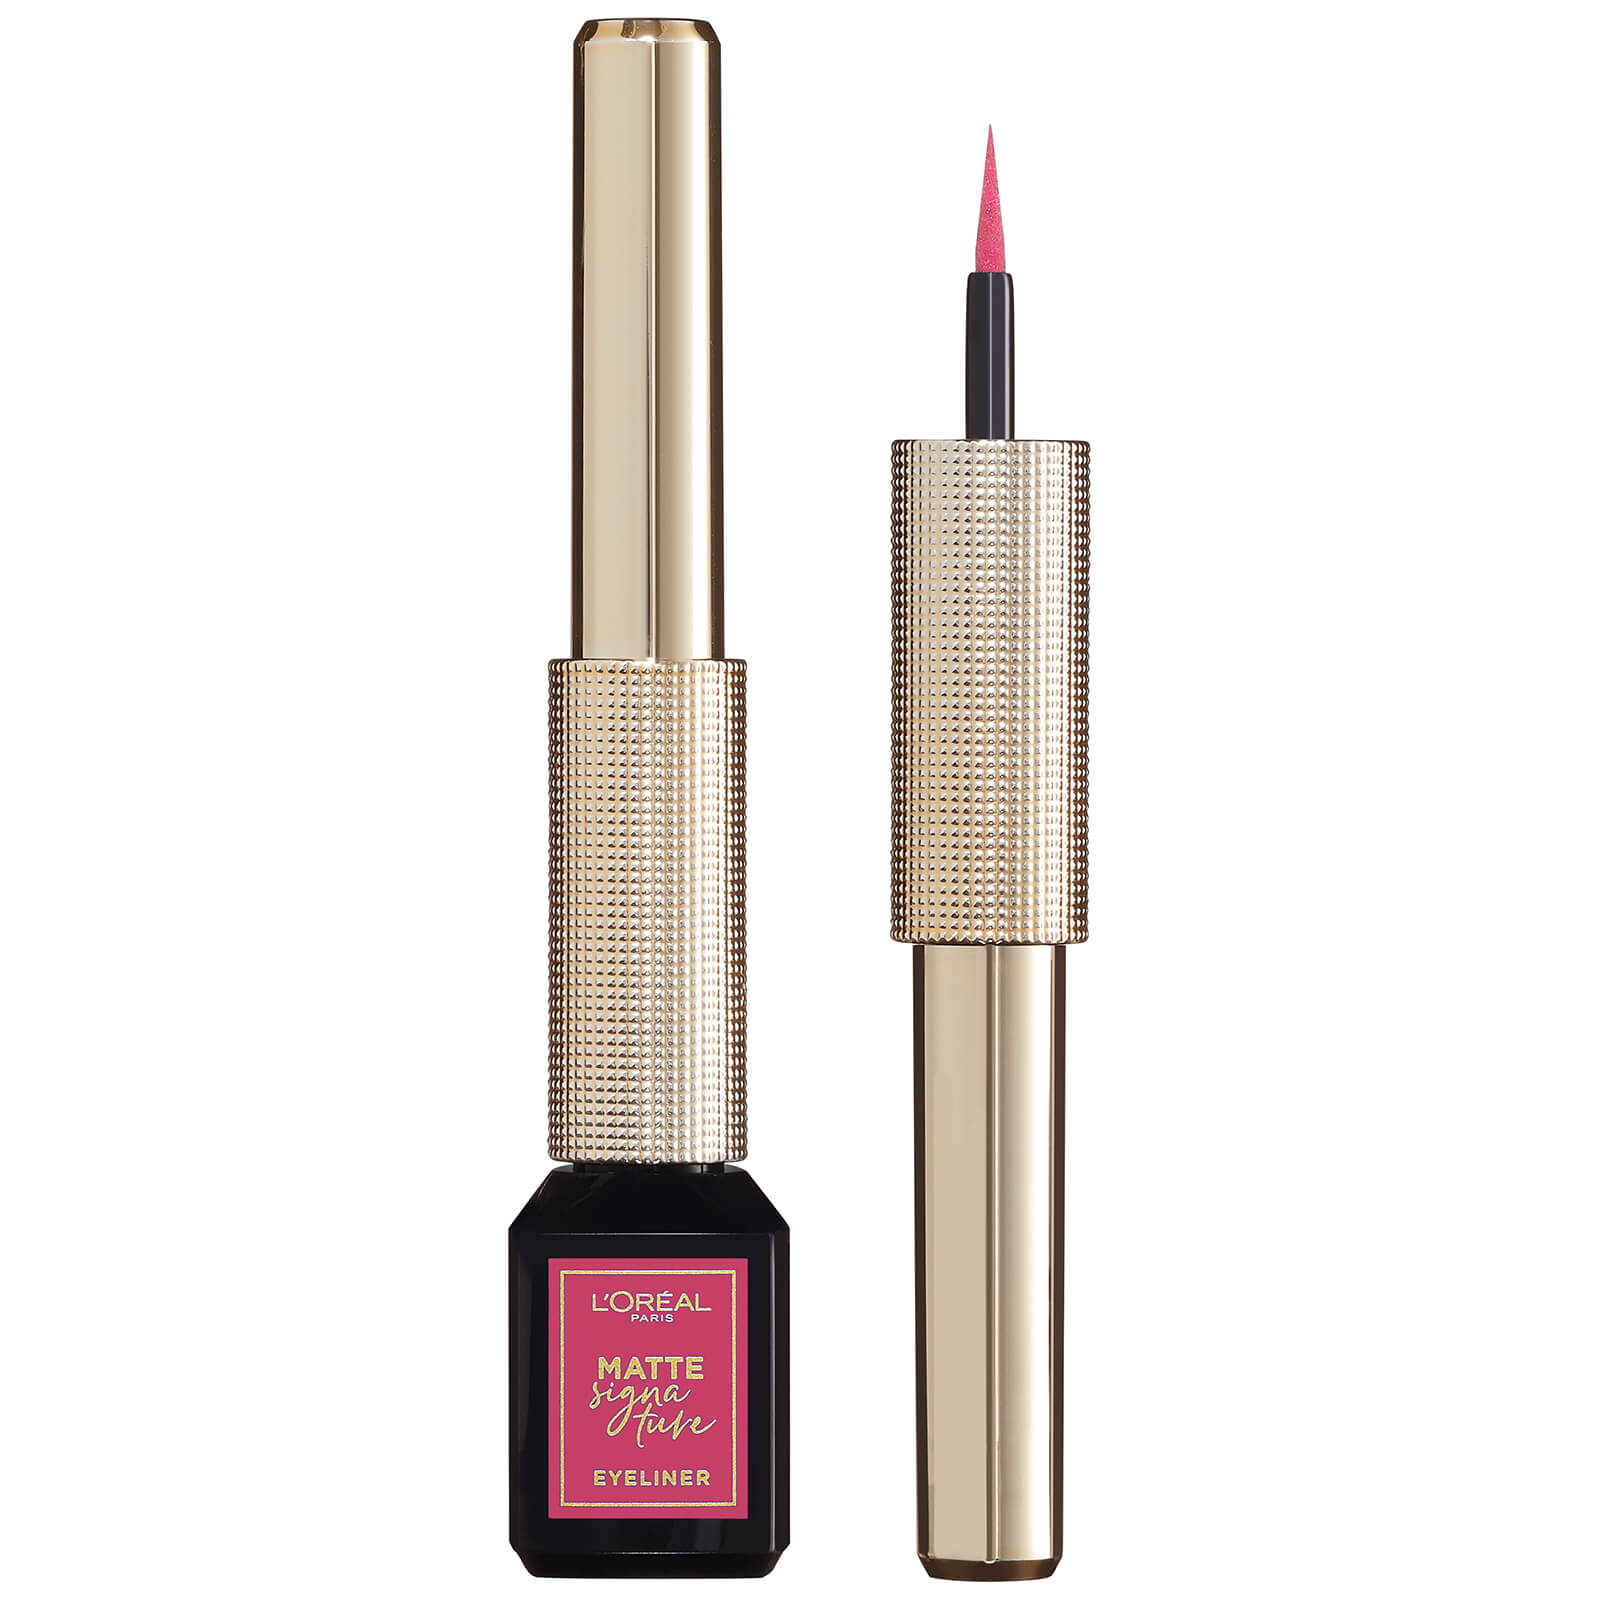 L'Oréal Paris Matte Signature Liquid Eyeliner 3ml (Various Shades) - 09 Pink